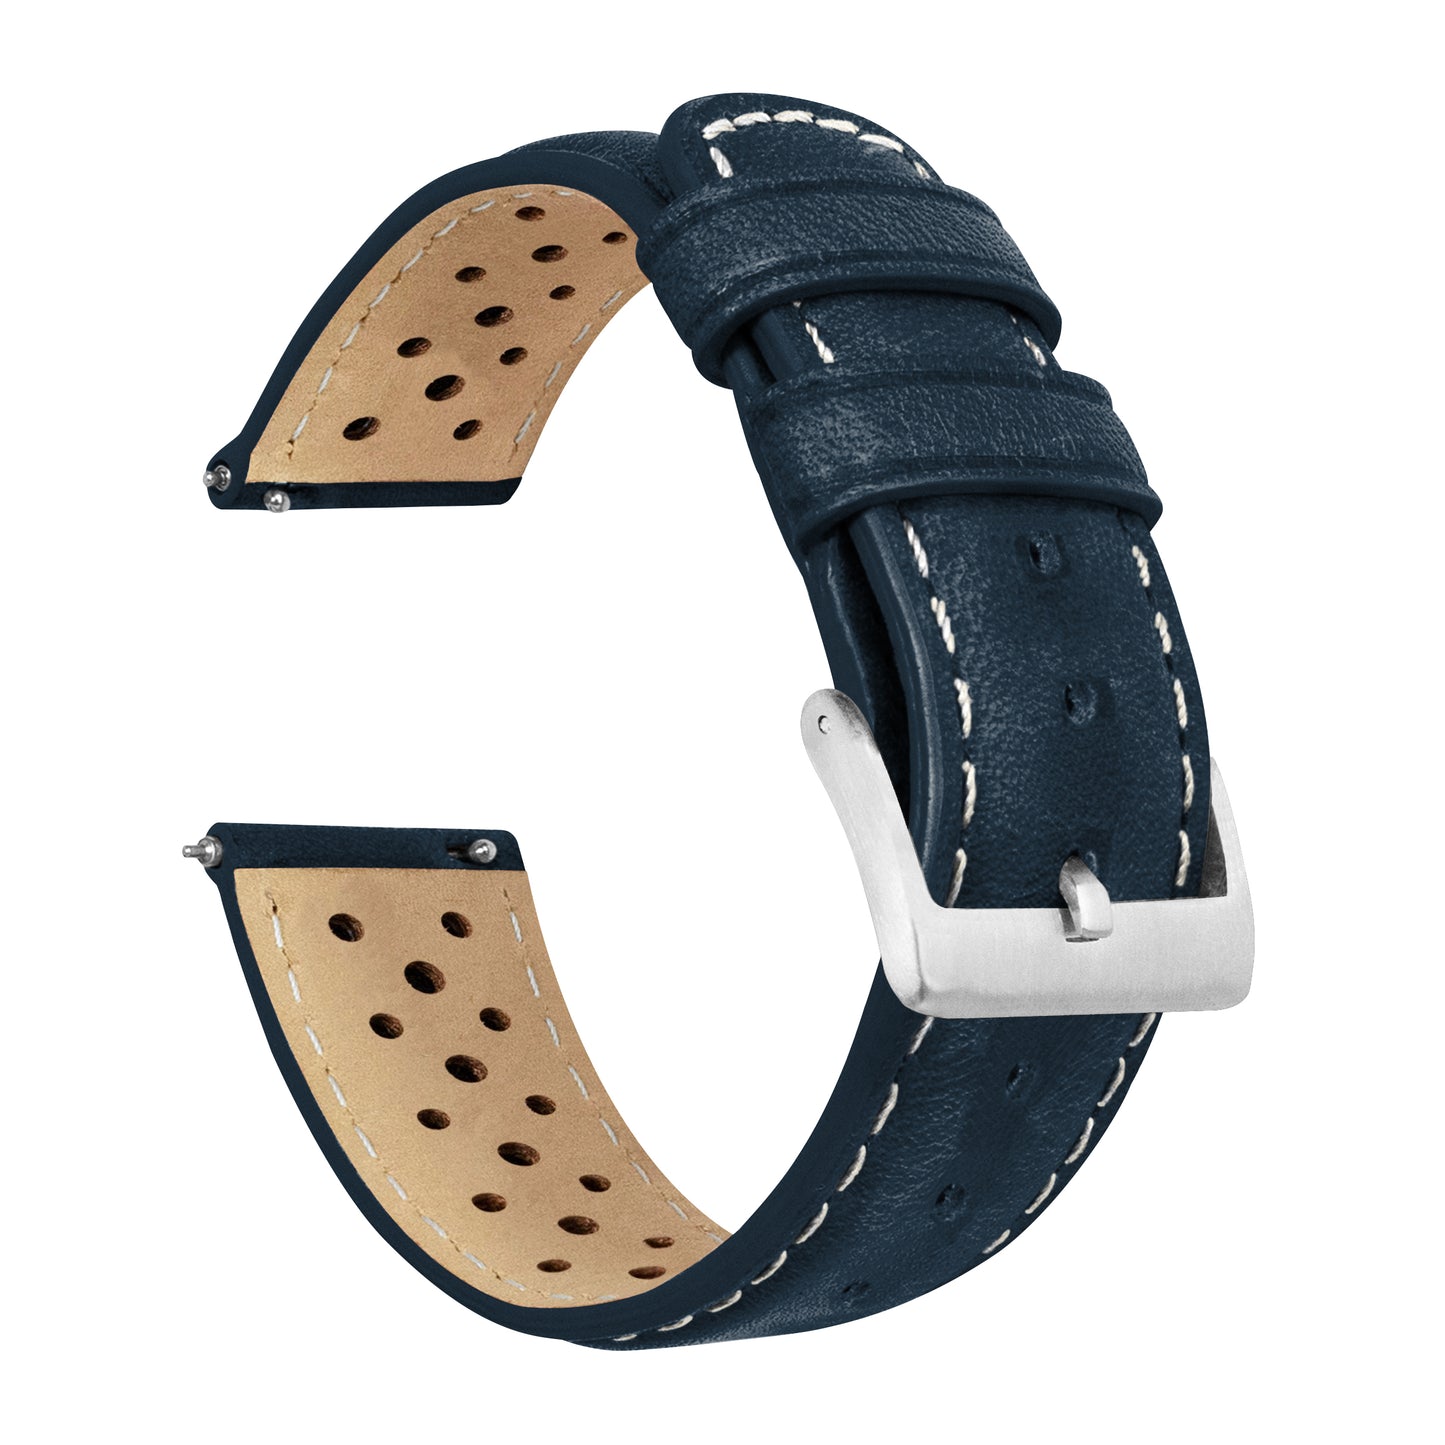 Samsung Galaxy Watch Racing Horween Leather Navy Blue Linen Stitch Watch Band